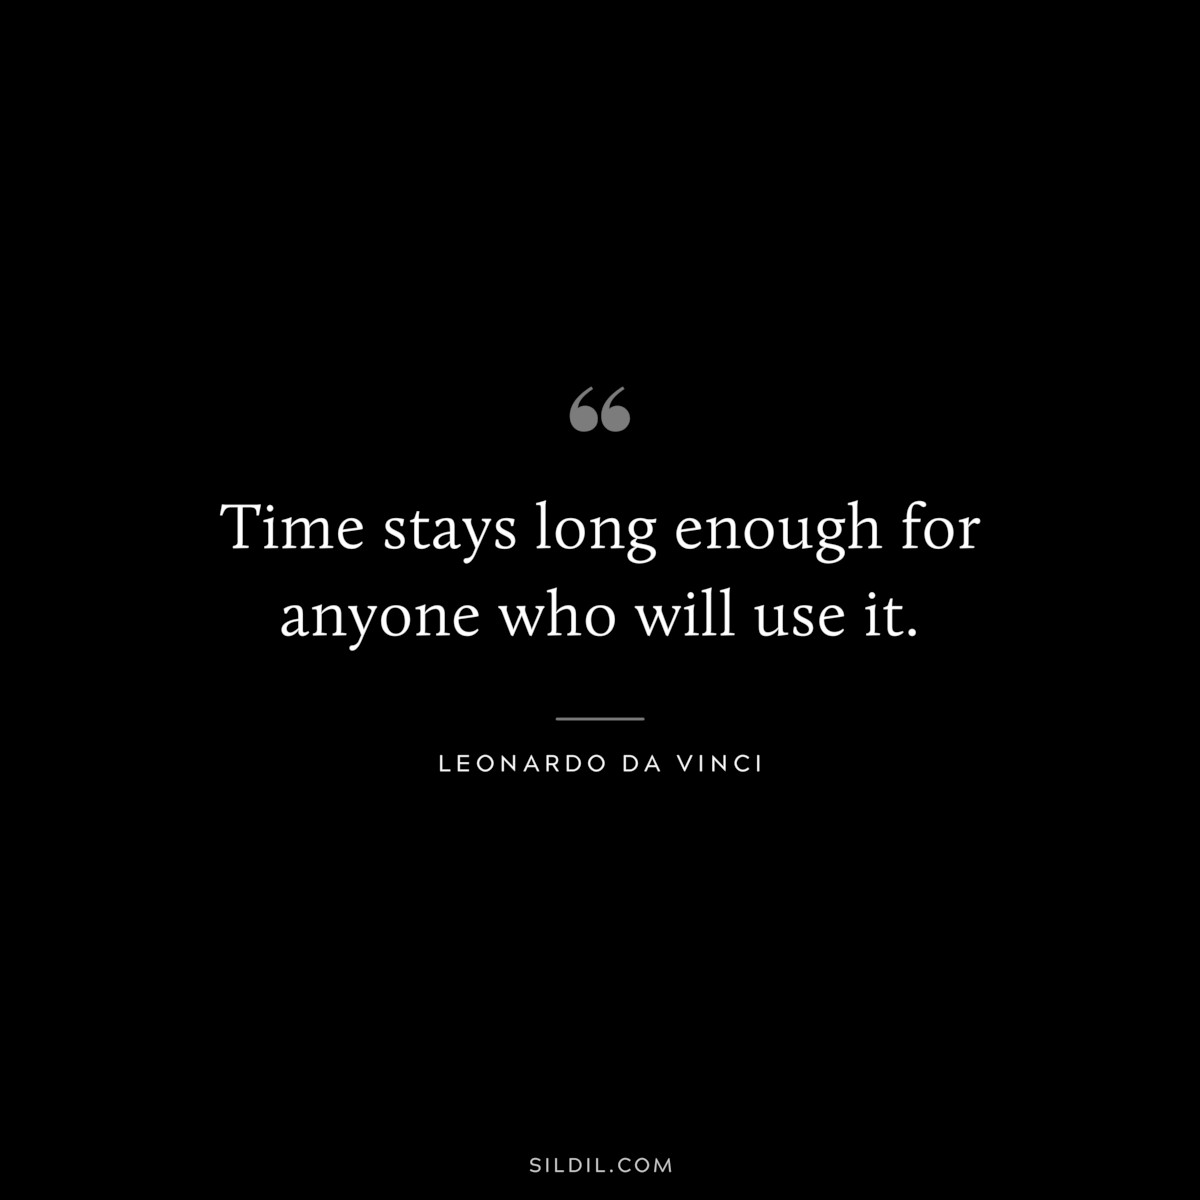 Time stays long enough for anyone who will use it. ― Leonardo da Vinci